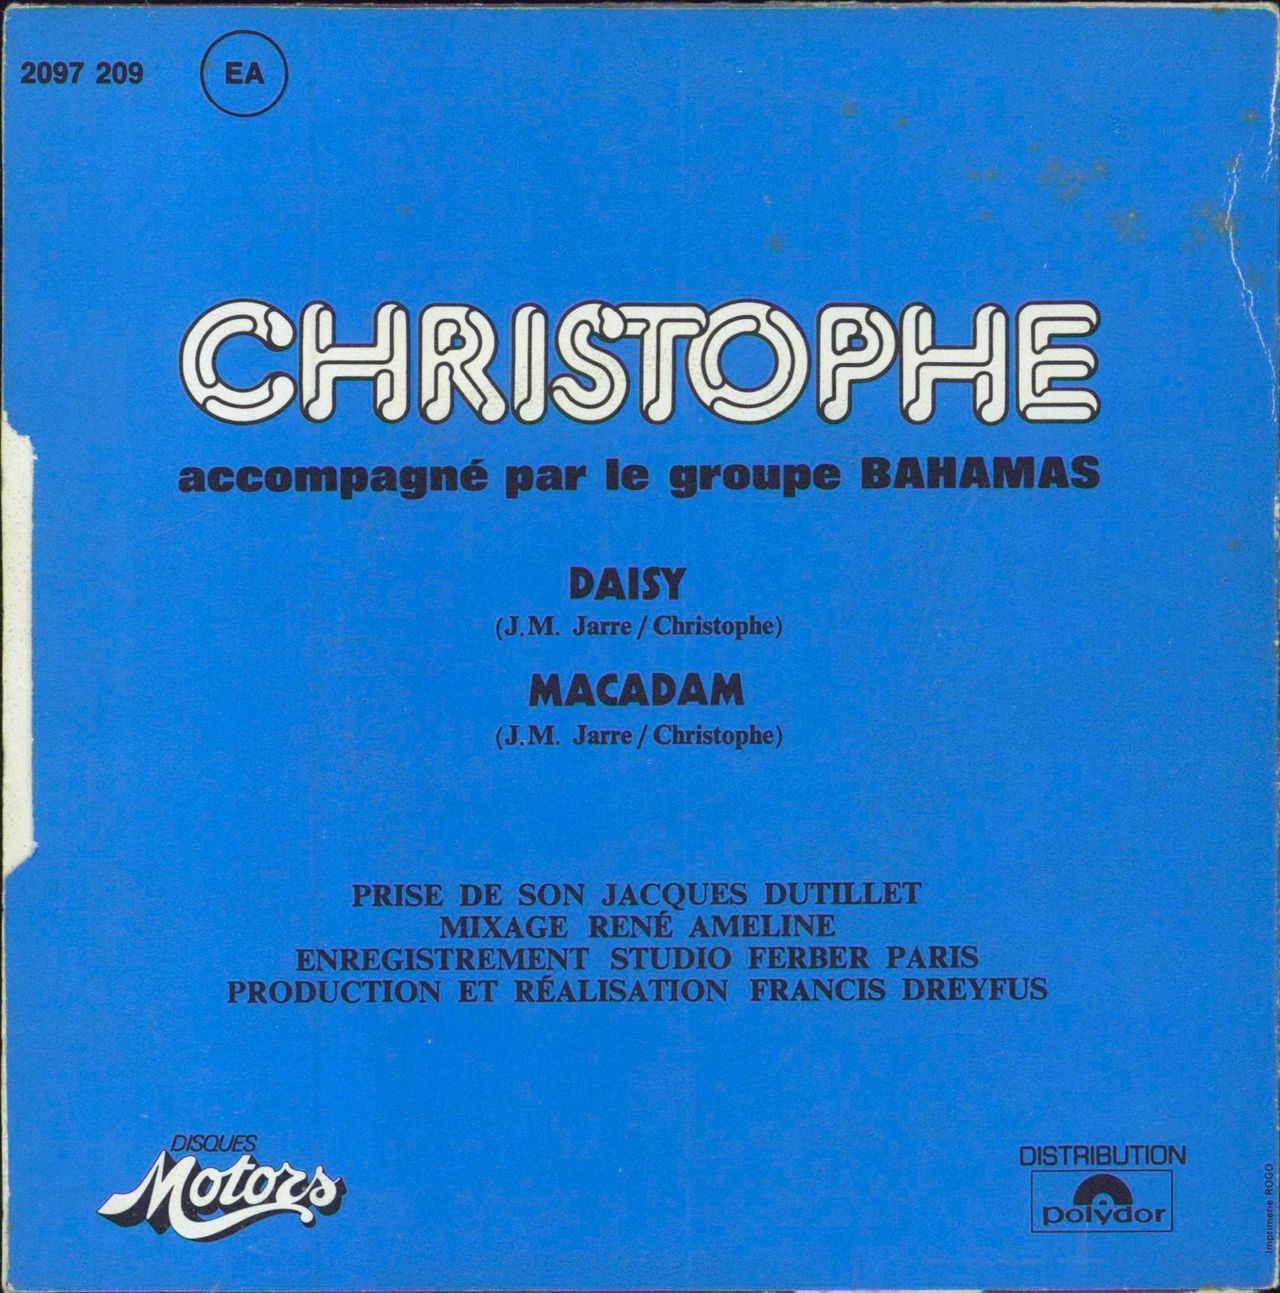 Christophe Daisy French 7 vinyl — RareVinyl.com